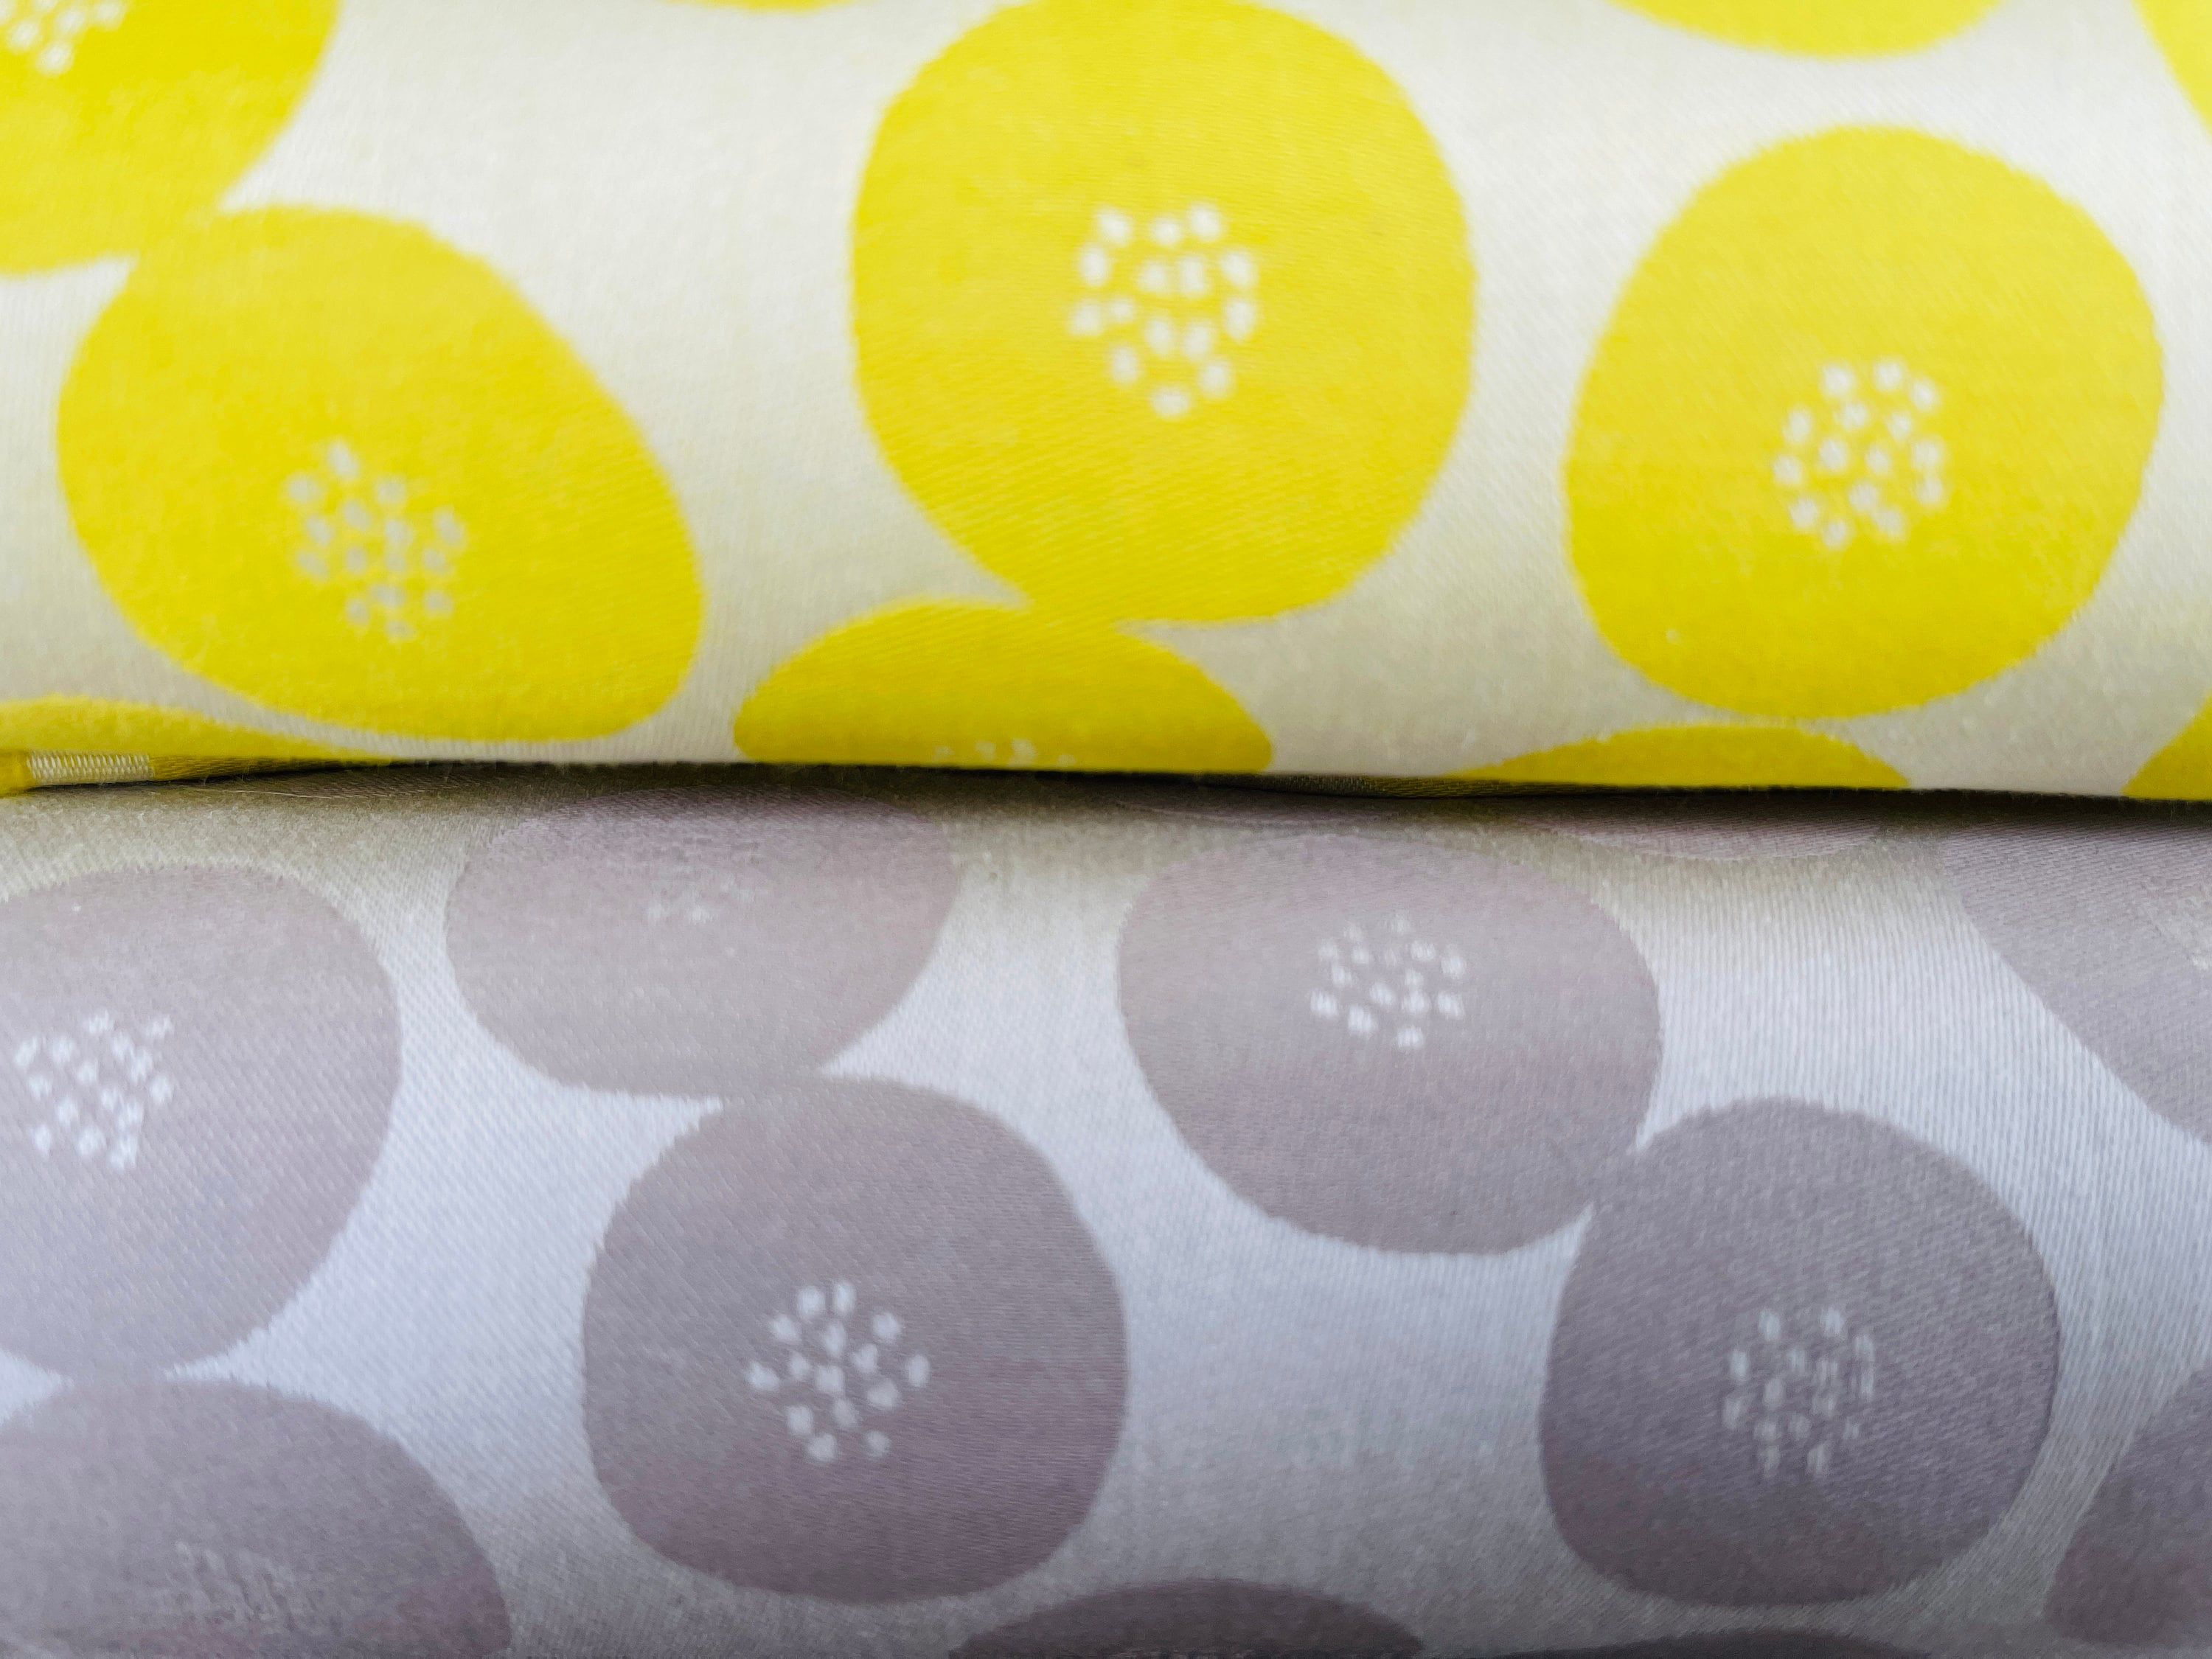 Circle Fabric - Japanese Reversible Fabric - Kokka Jacquard - Cotton Fabric - EKX-1